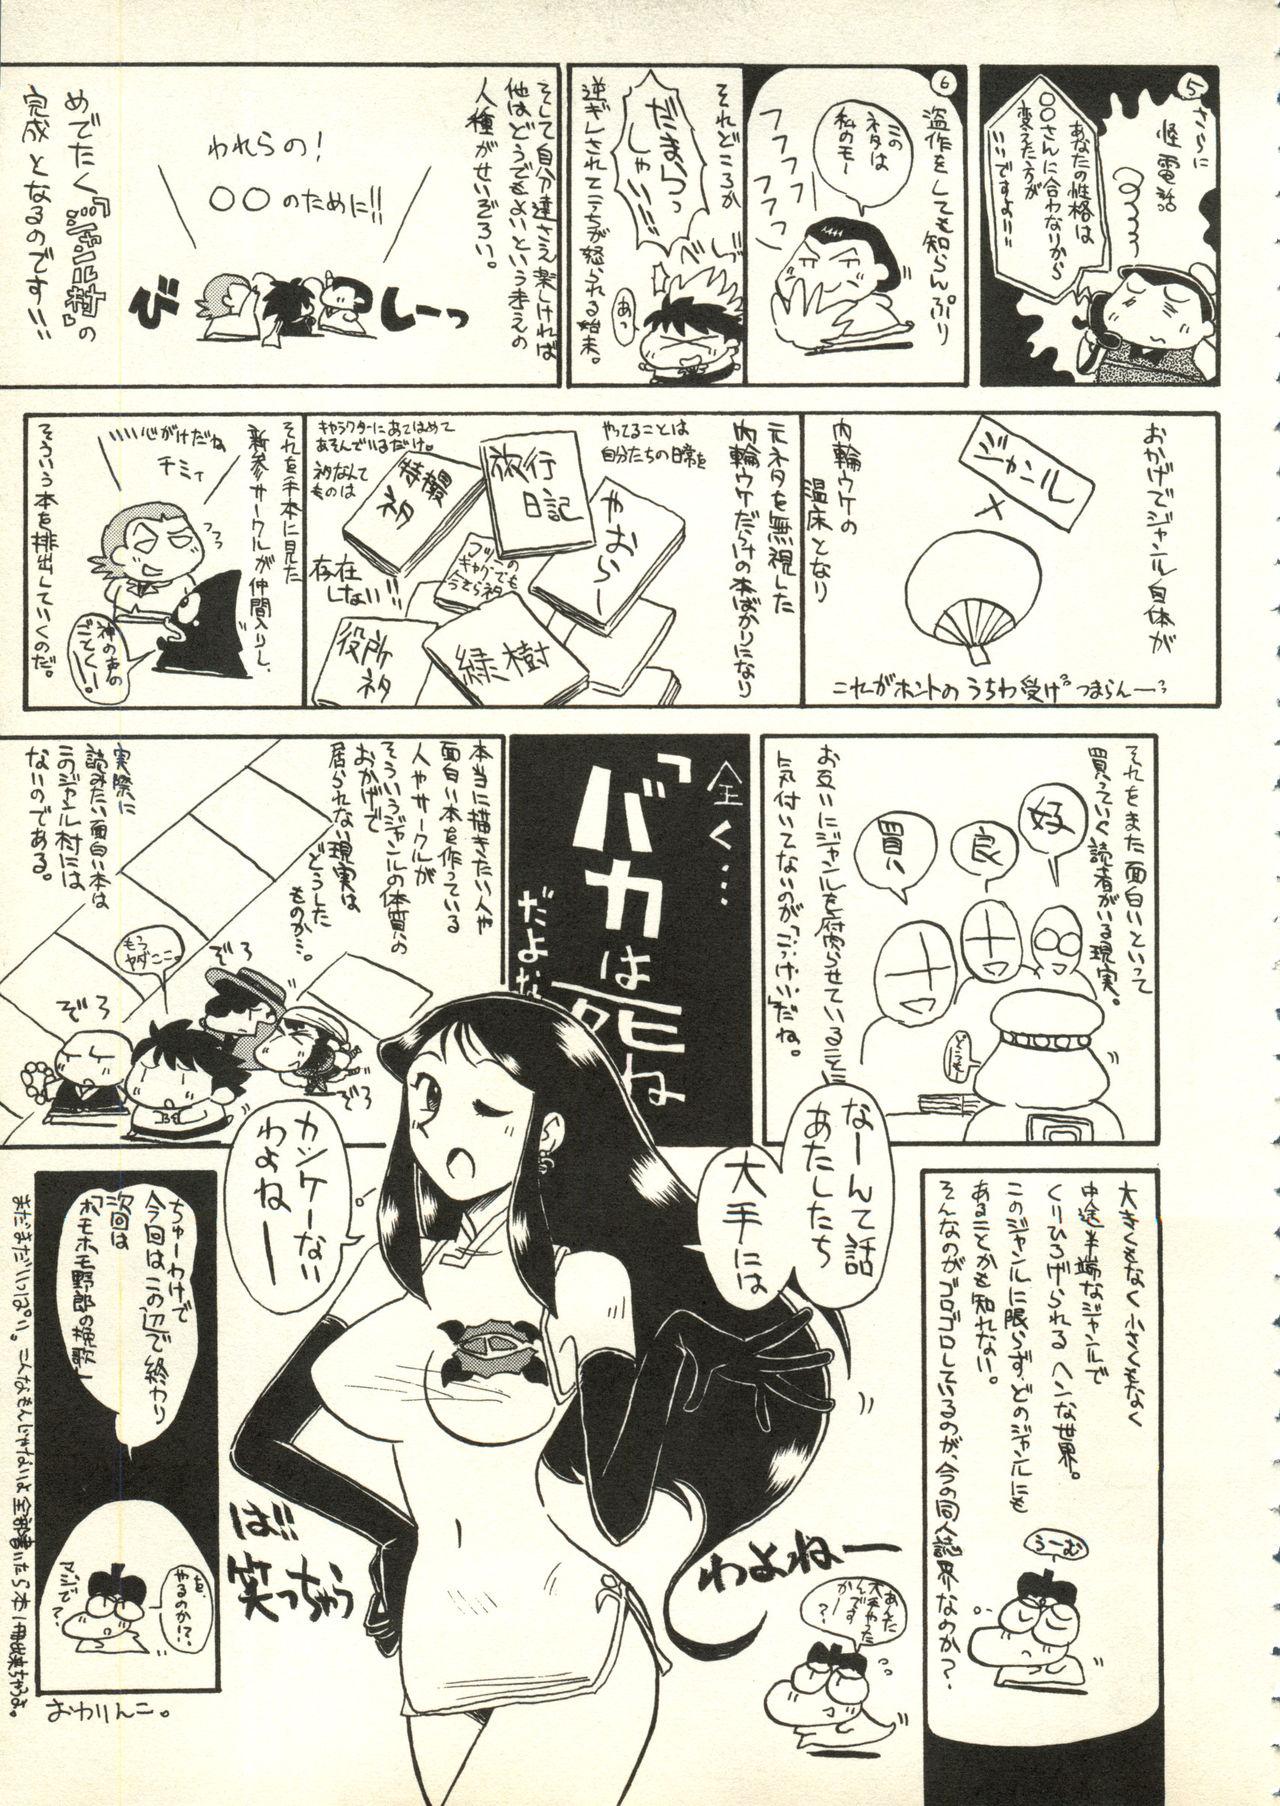 [Anthology] Bishoujo Shoukougun V3 (1) '99 Summer Edition (Various) 13